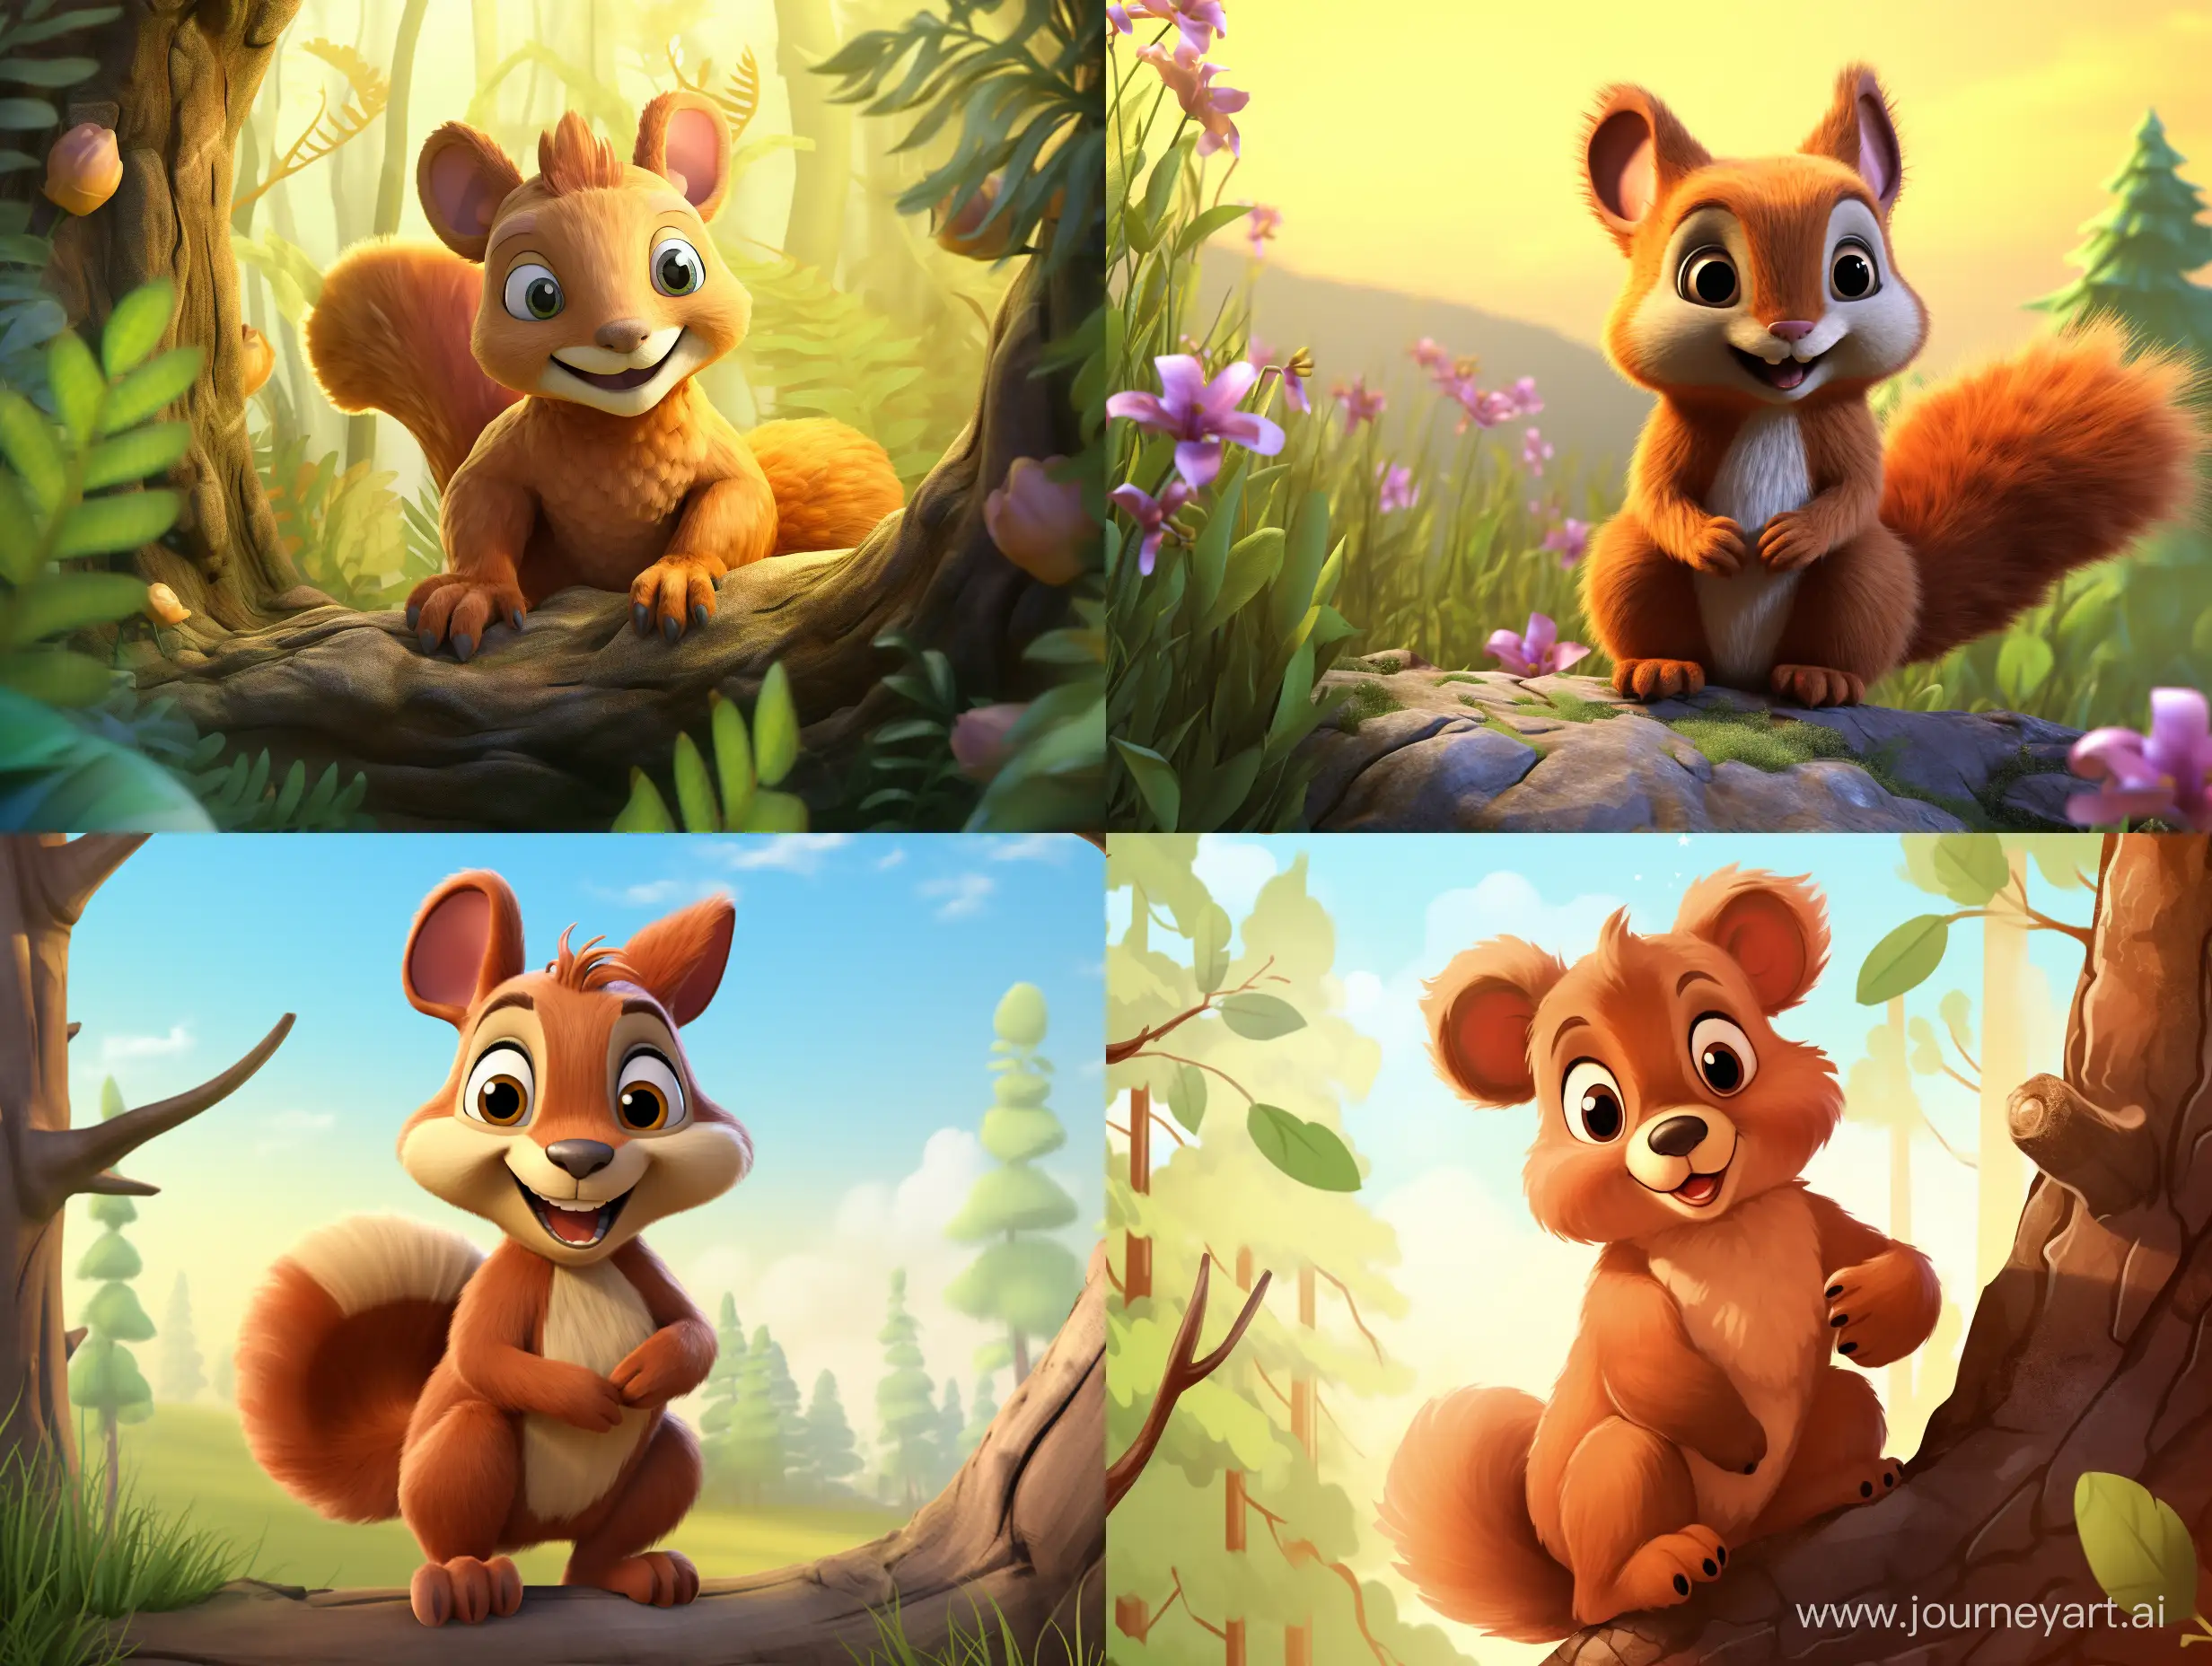 Squirrel mascot, a poster for a children's magazine